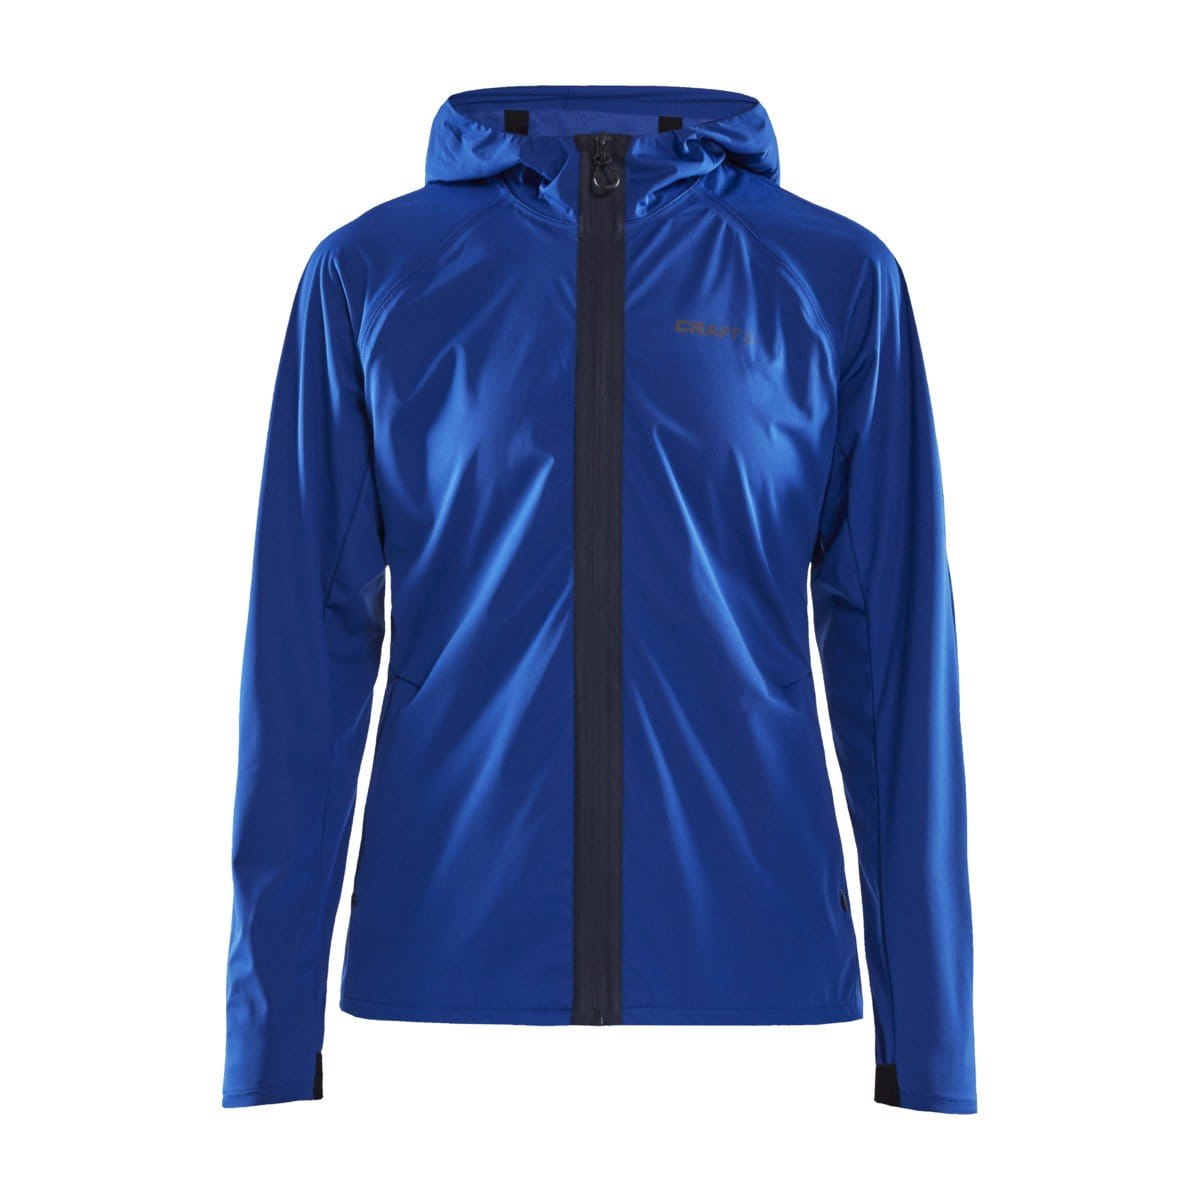 Dámská běžecká bunda Craft W Bunda Hydro modrá